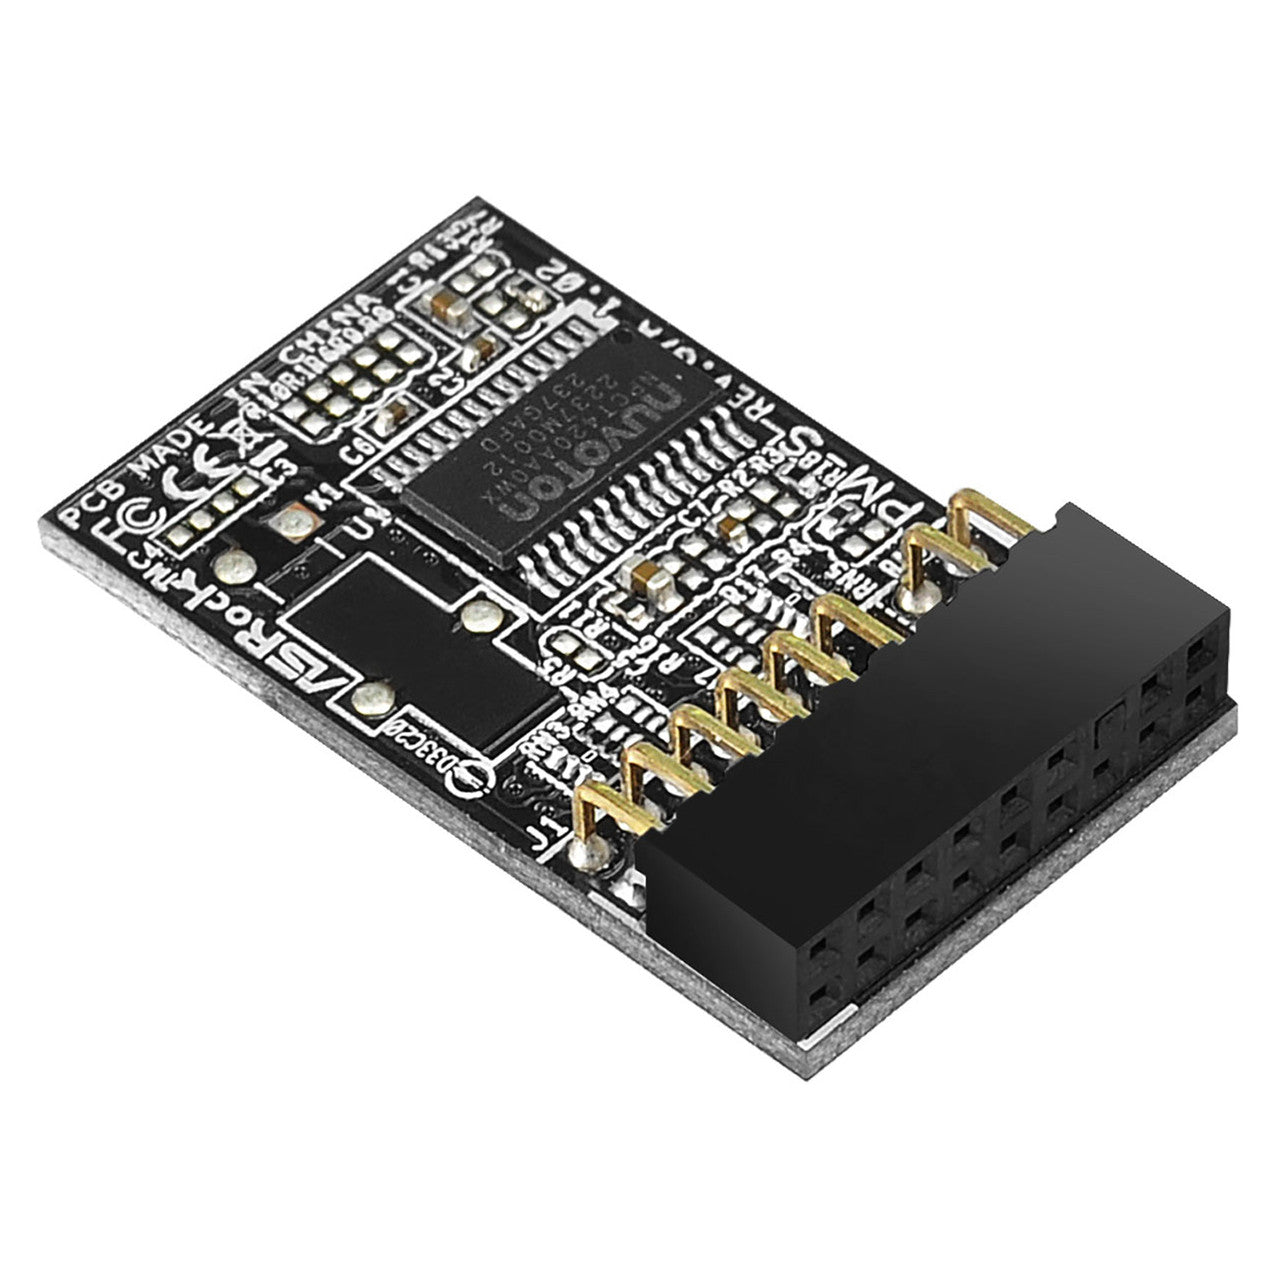 ASRock Rack TPM2-S - Trusted Platform Module (TPM) - 17 PIN connector, LPC inter